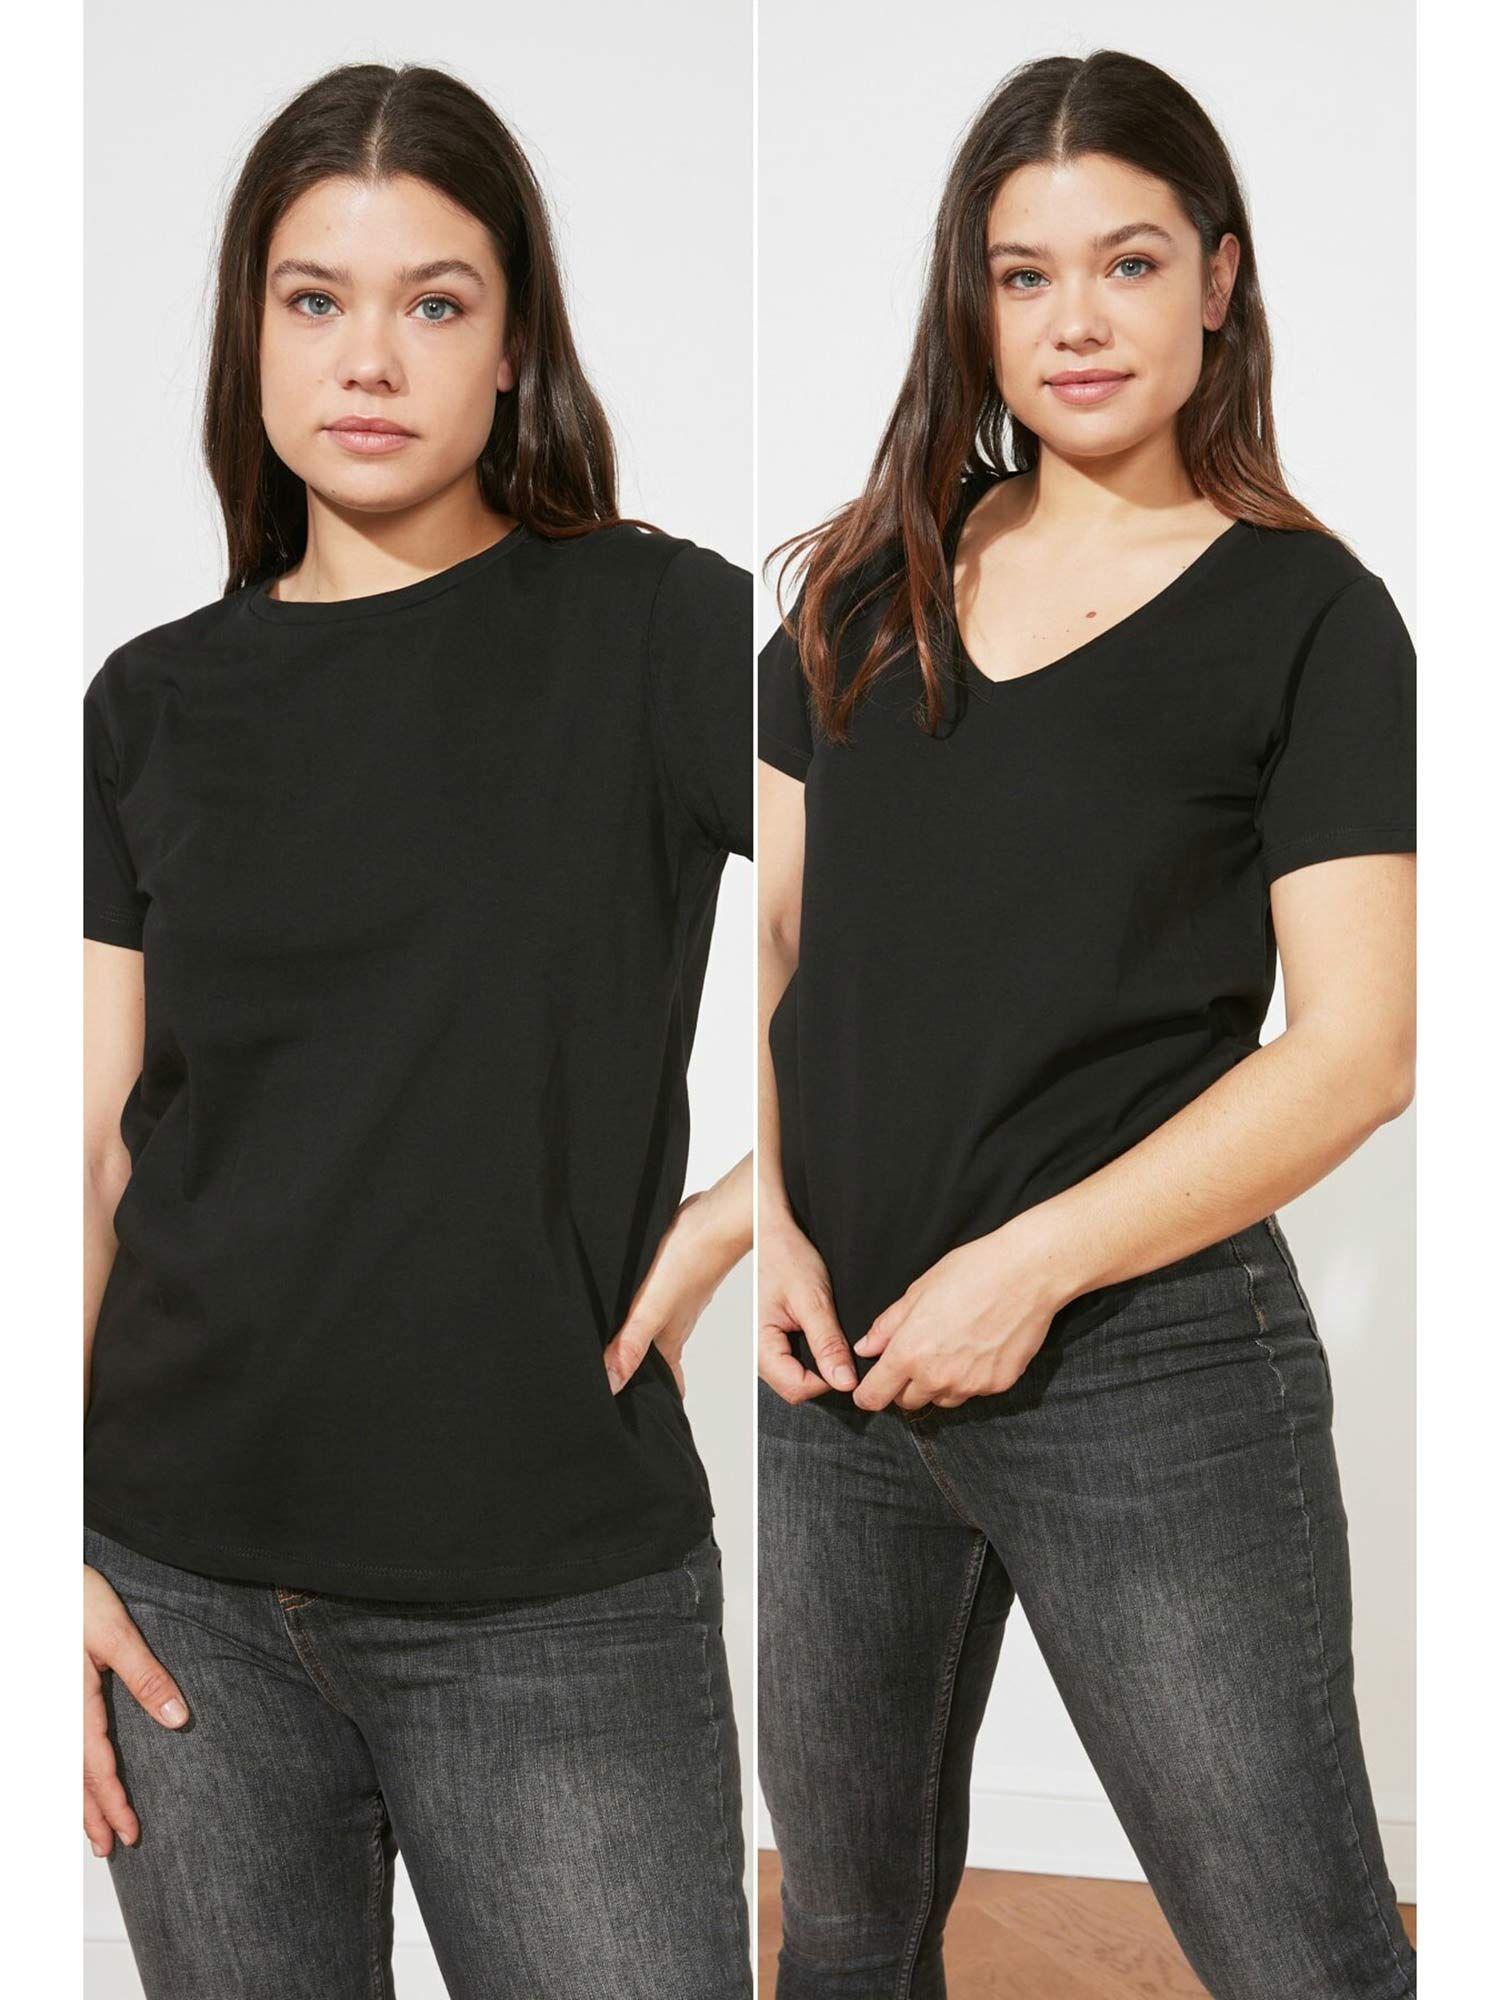 women's black solid/plain pattern t-shirts